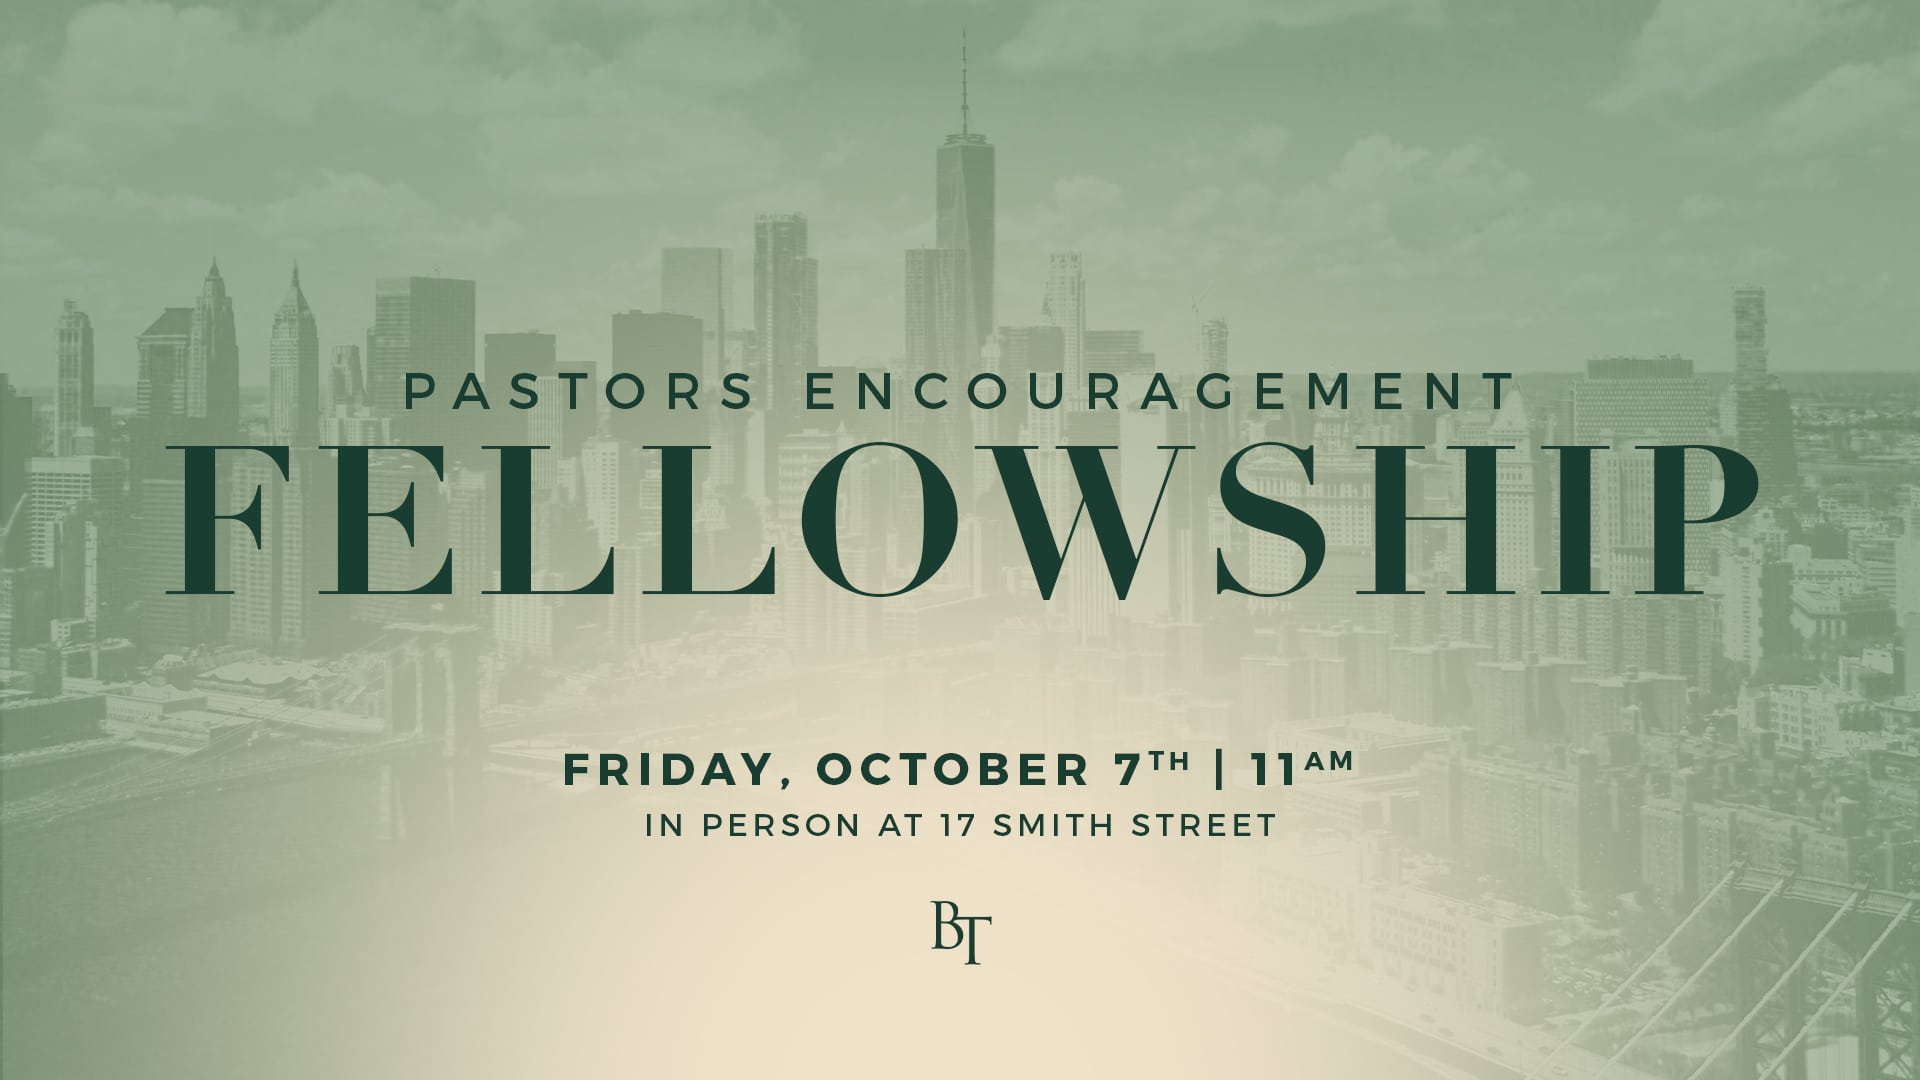 The Brooklyn Tabernacle Pastors encouragement Fellowship header